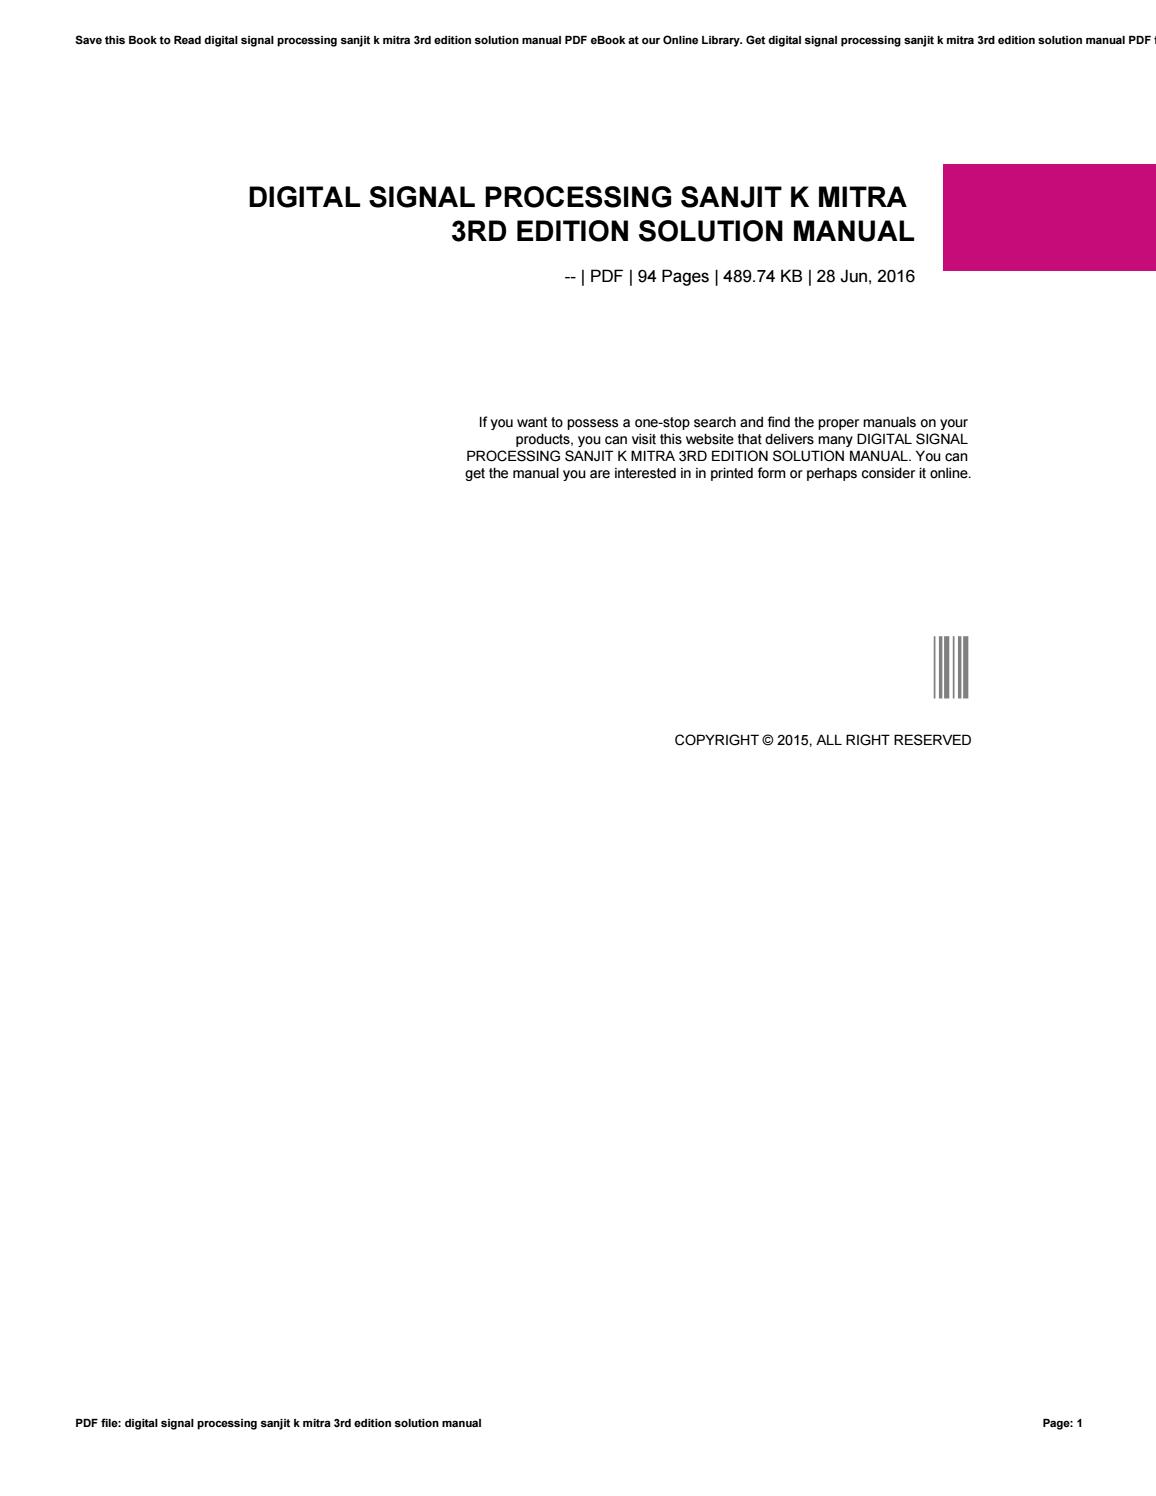 digital signal processing mitra 3rd edition pdf